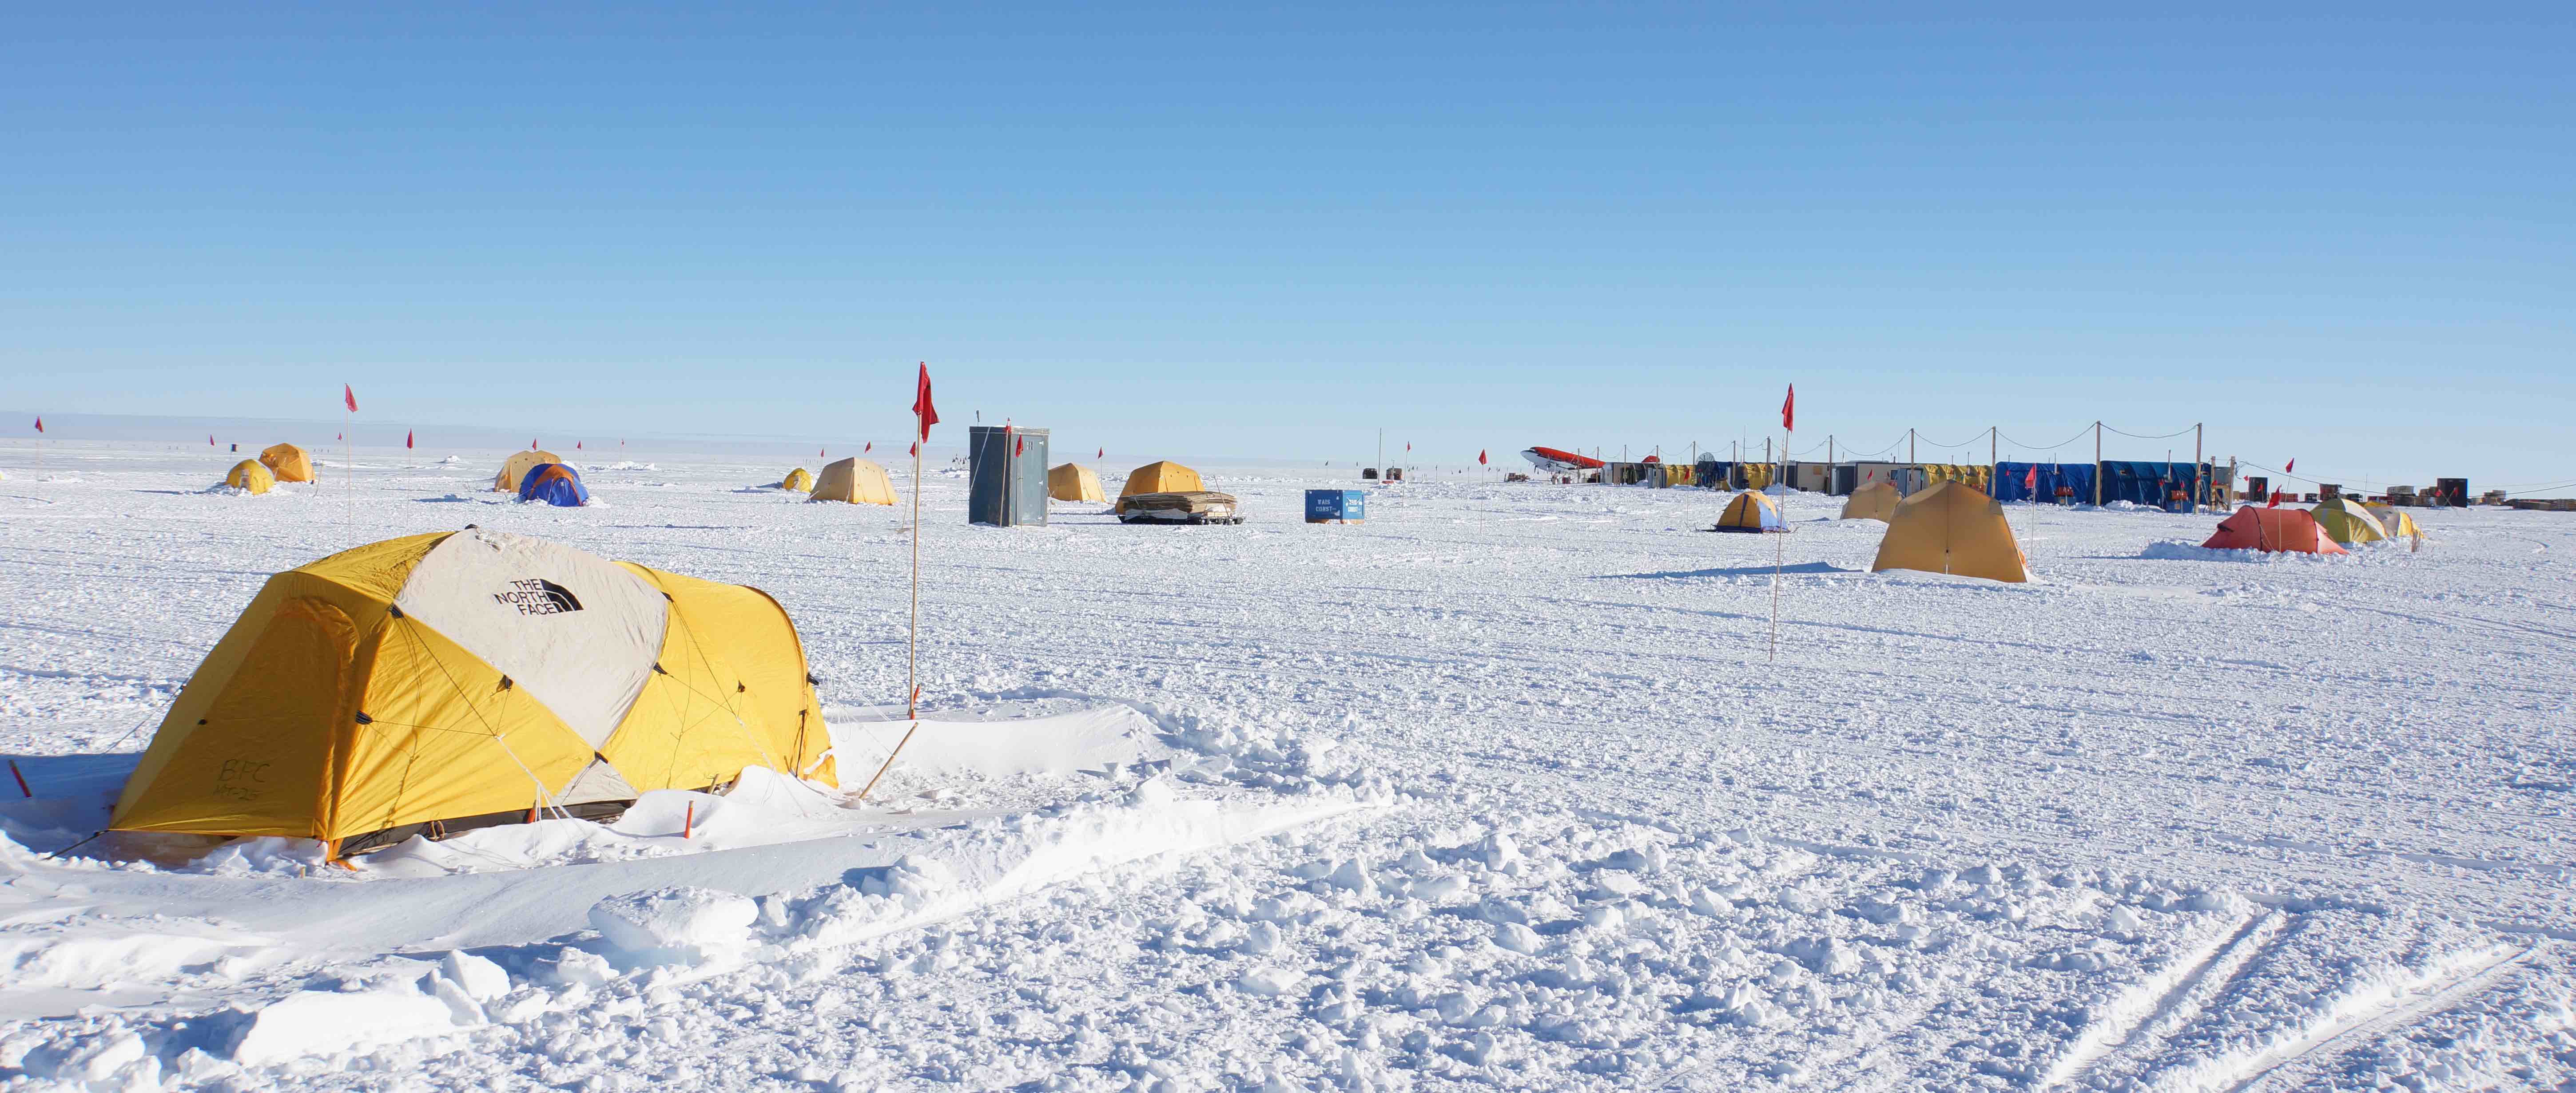 Tent City, WAIS Divide field camp